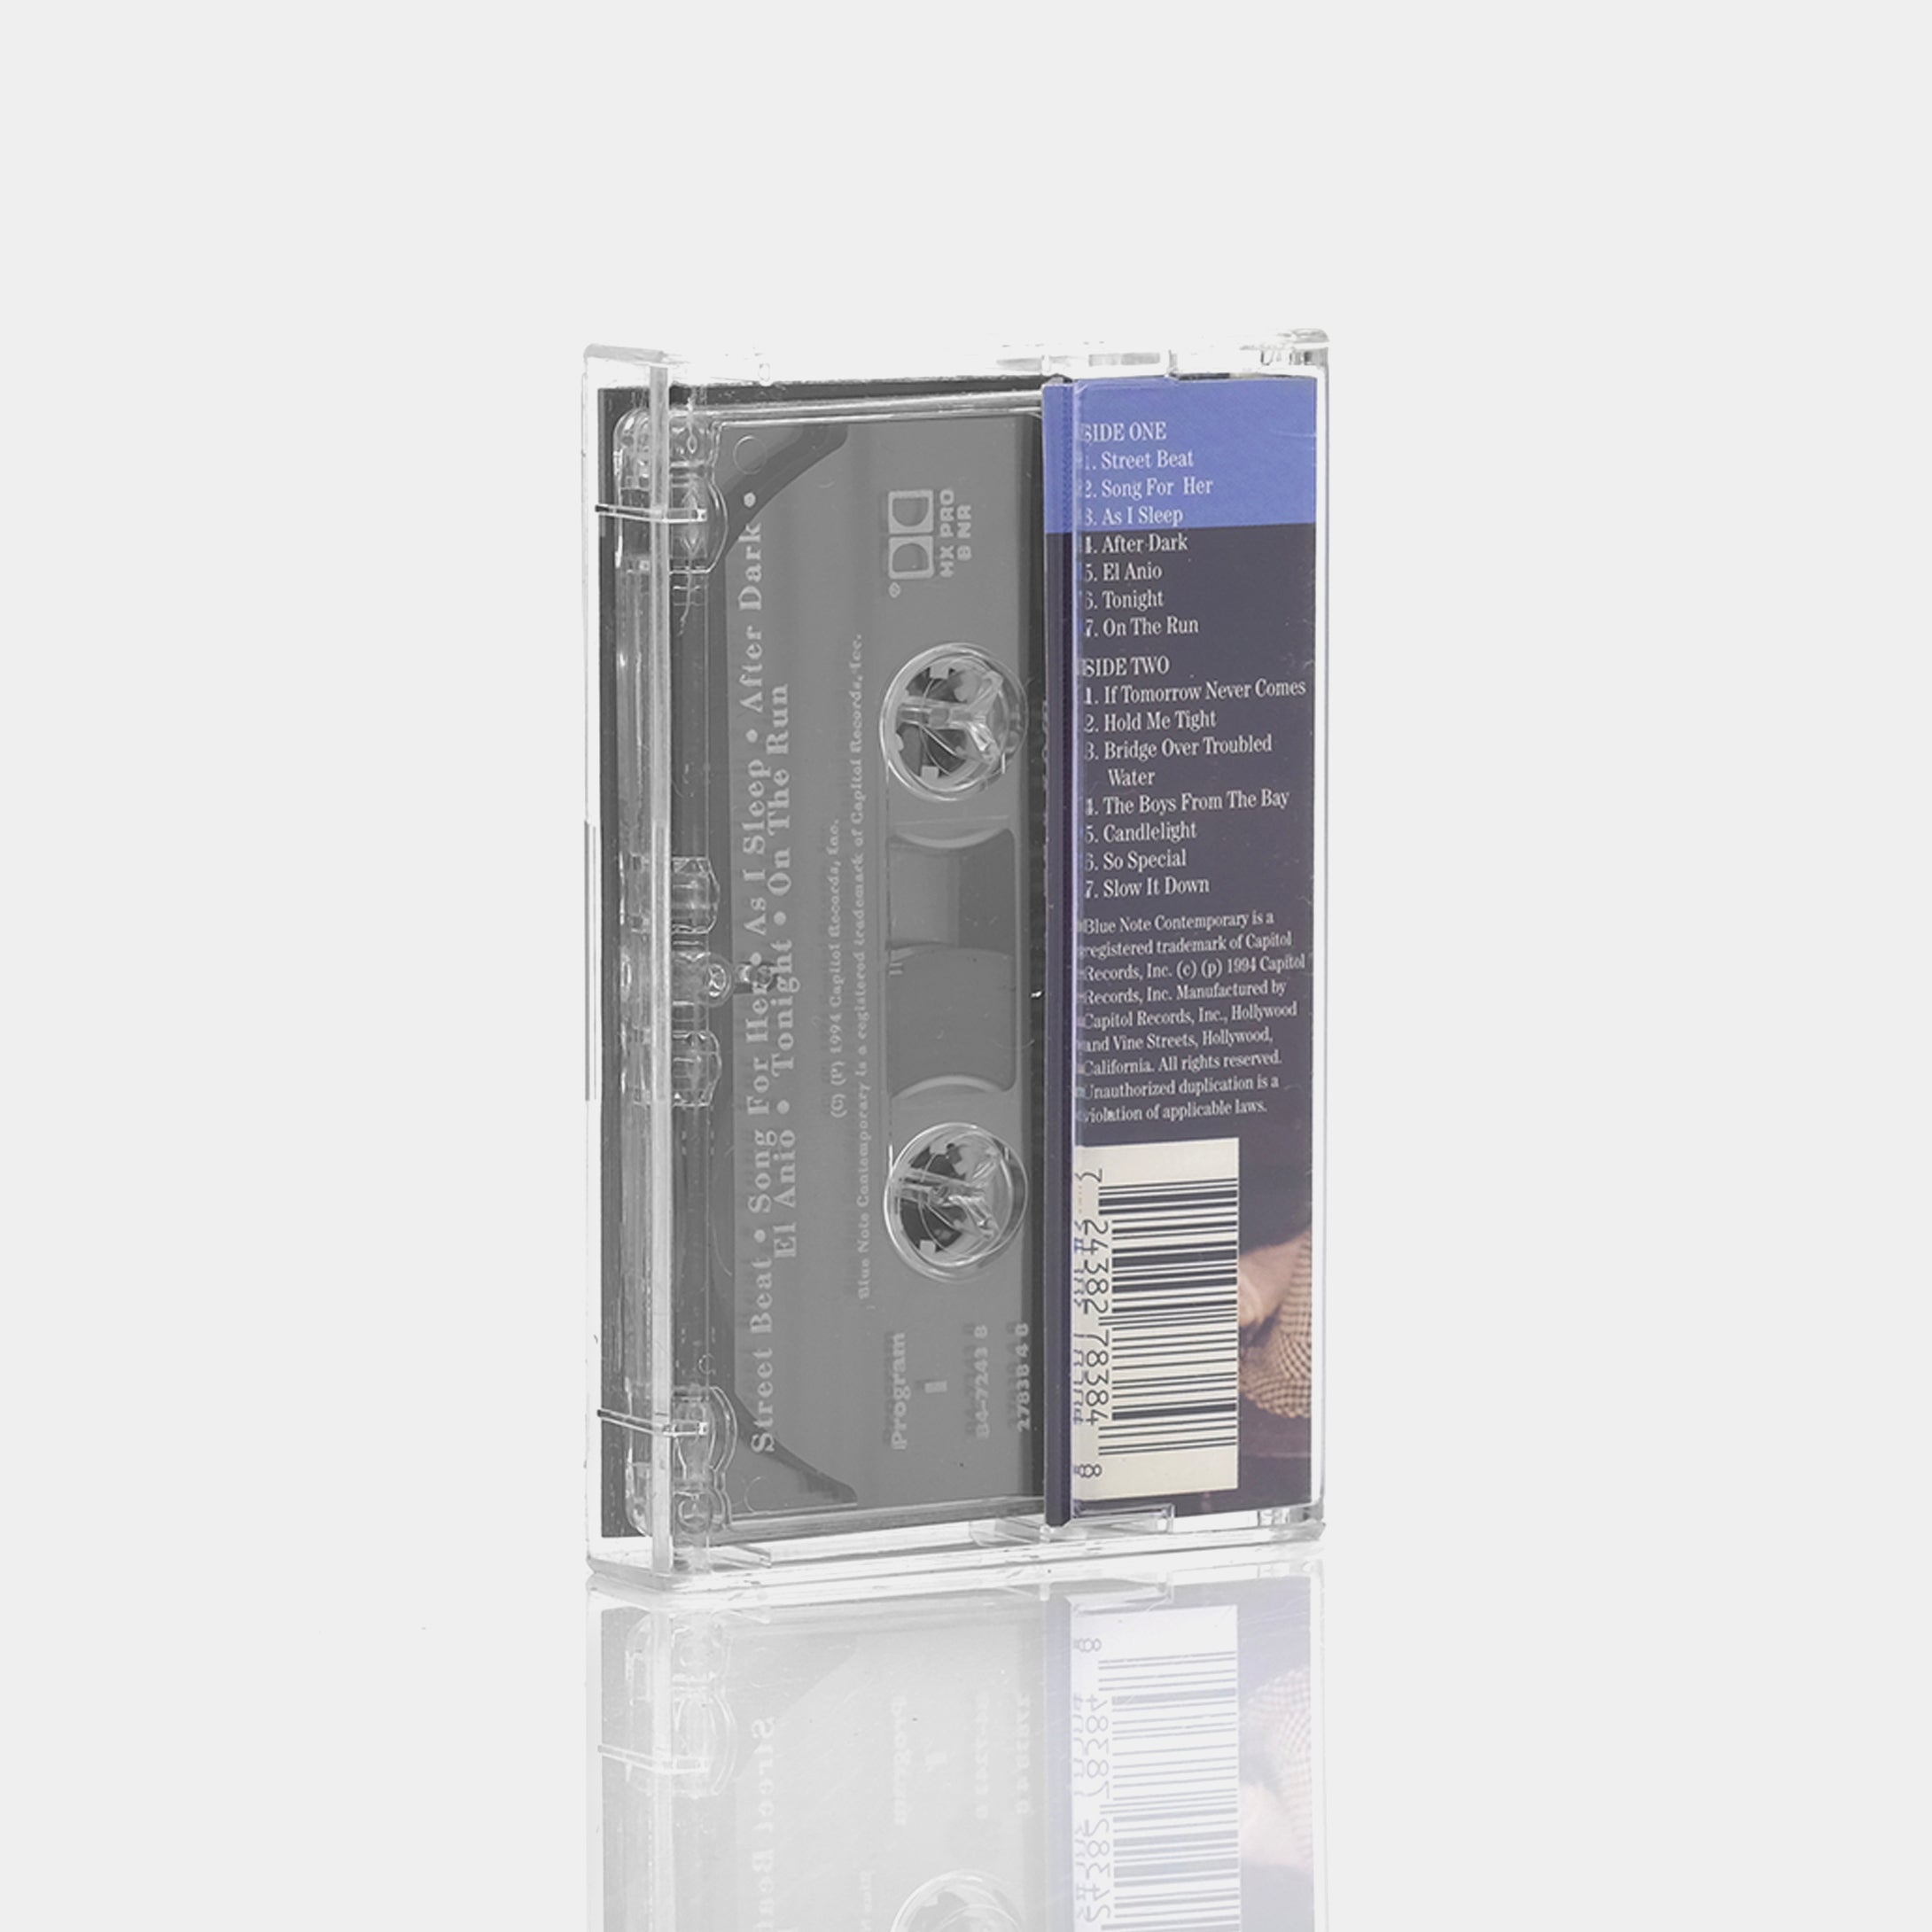 Richard Elliot - After Dark Cassette Tape